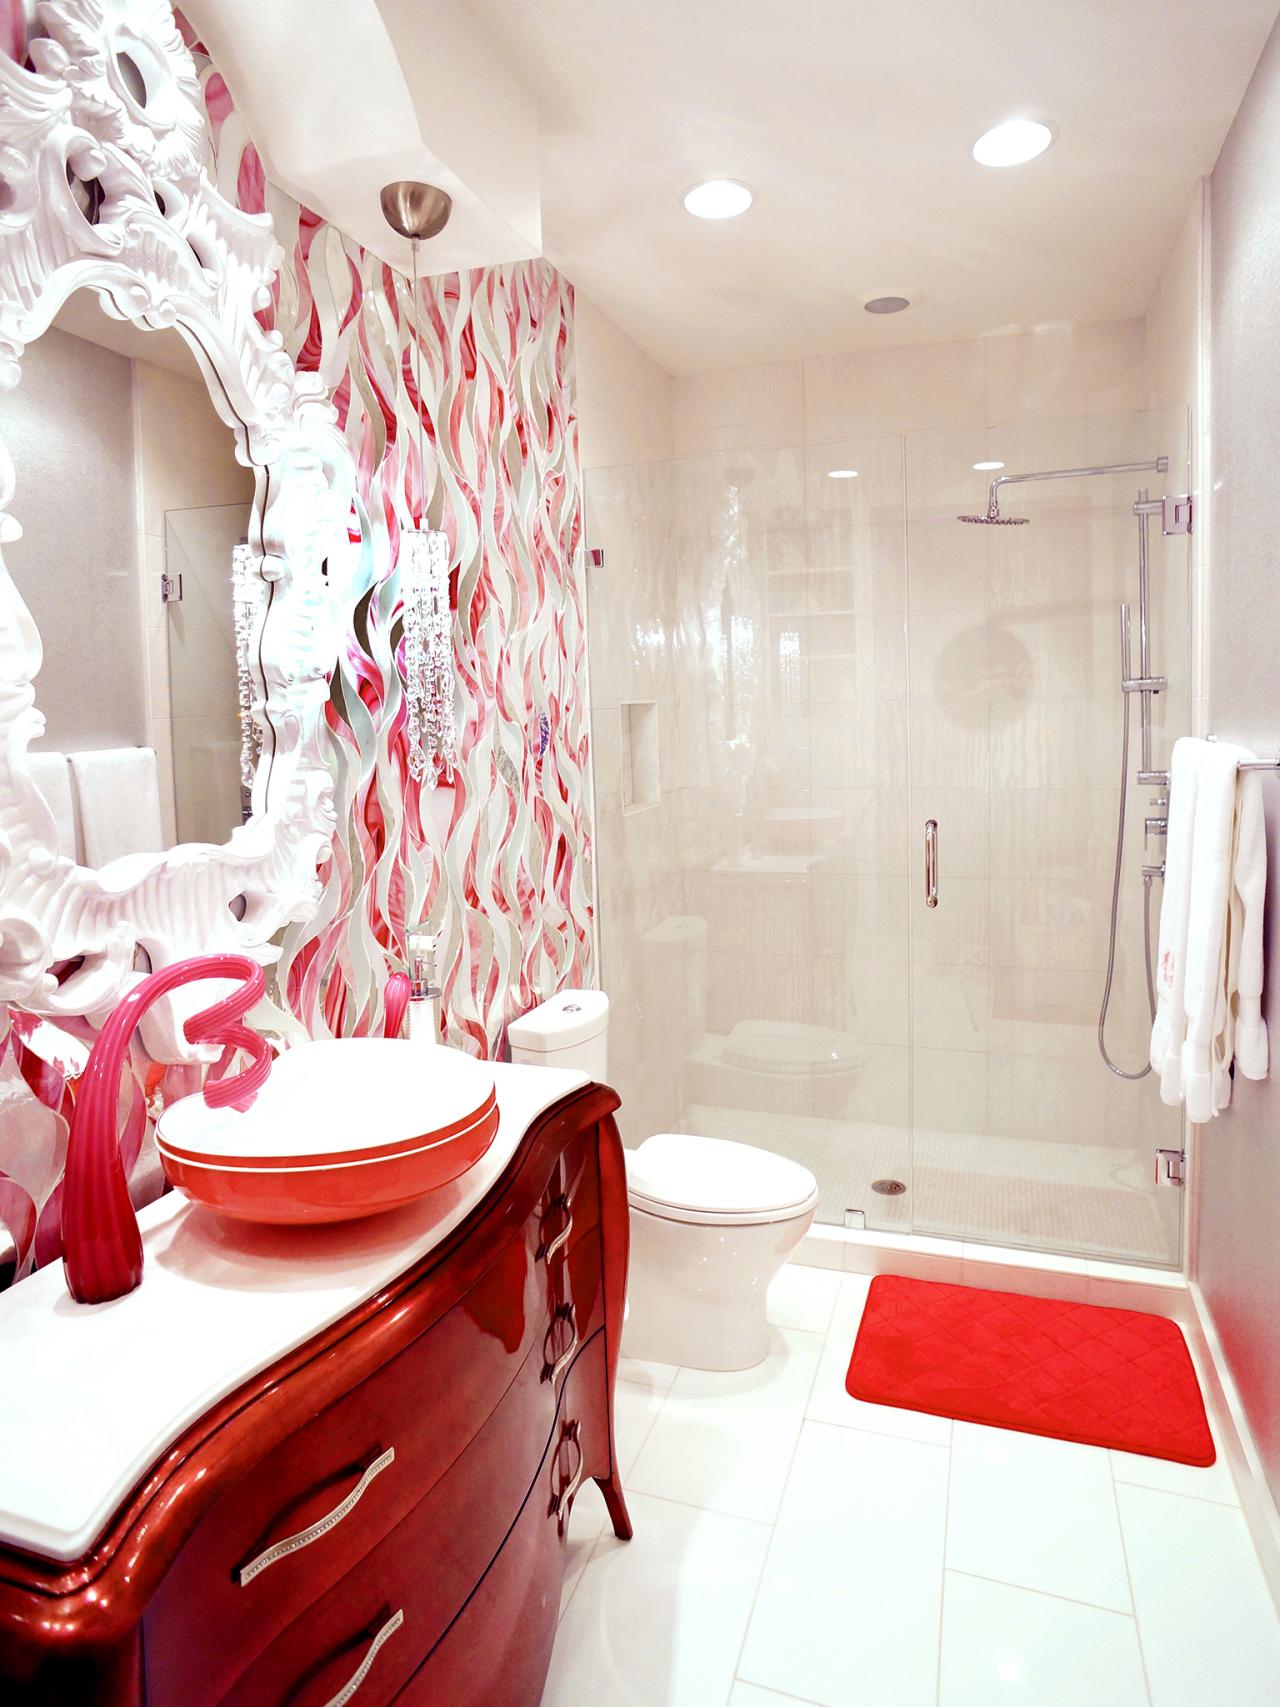 Scotrade DMN Brand New Style Résine Durable Relax Word DECOR salle de bains Décoration